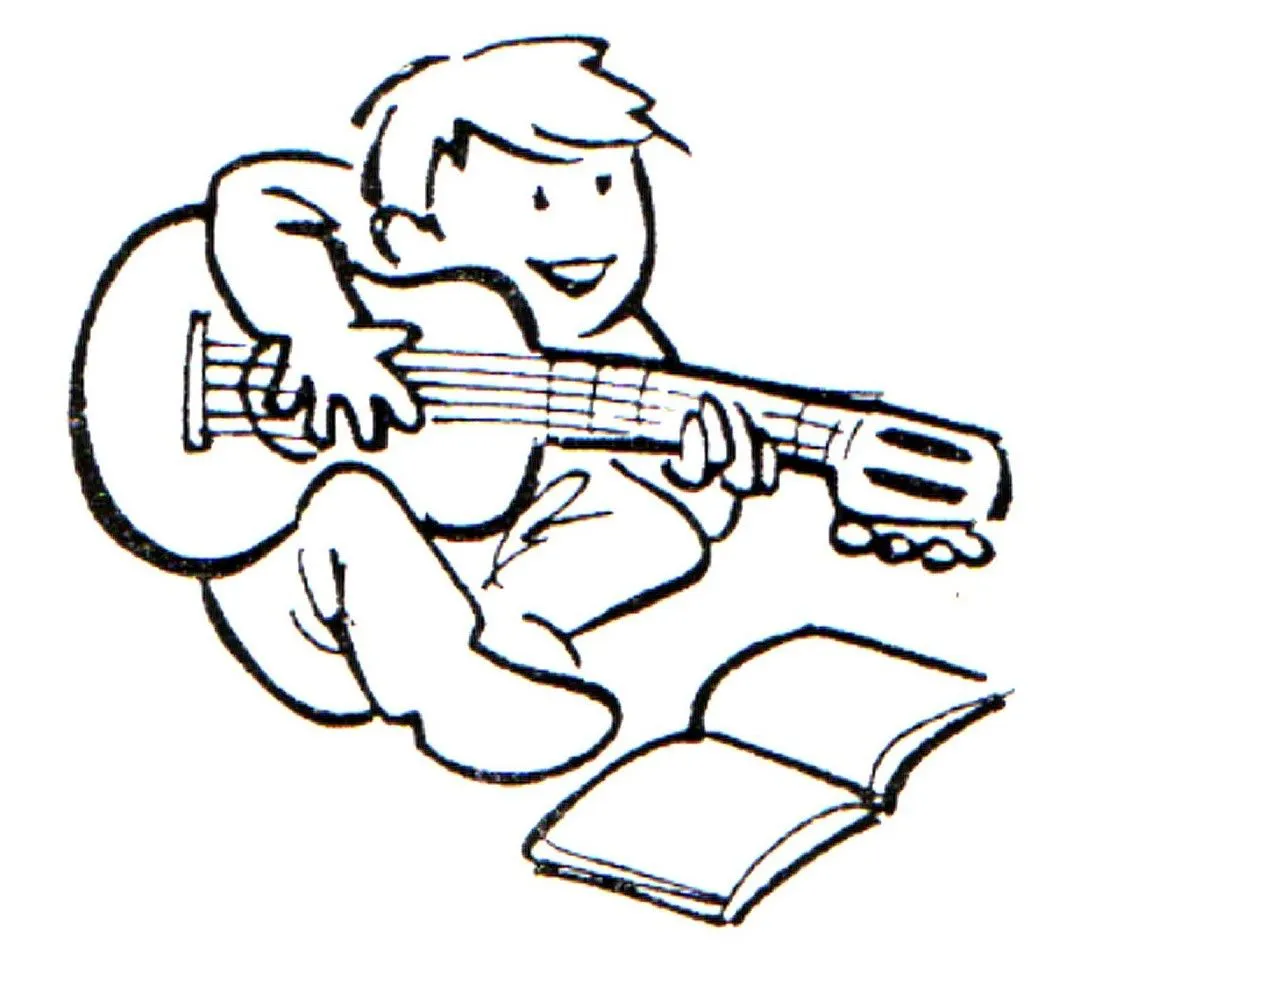 Dibujos para colorear de niños tocando guitarra - Imagui